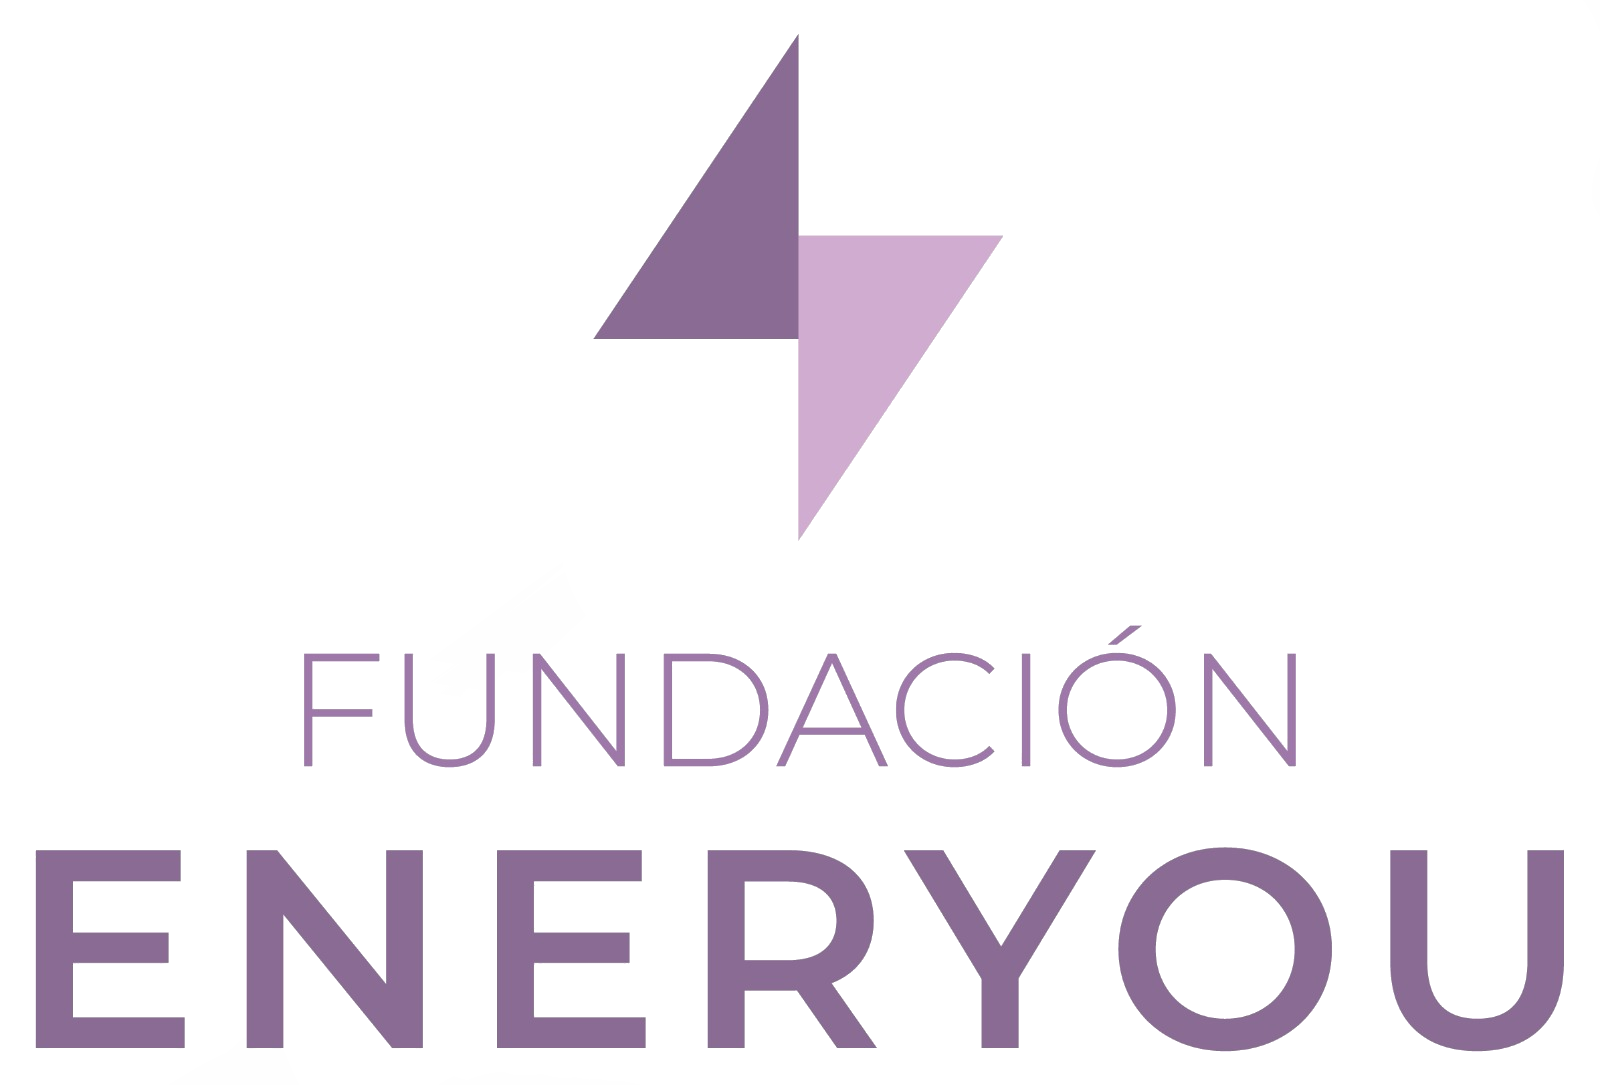 Eneryou Foundation logo